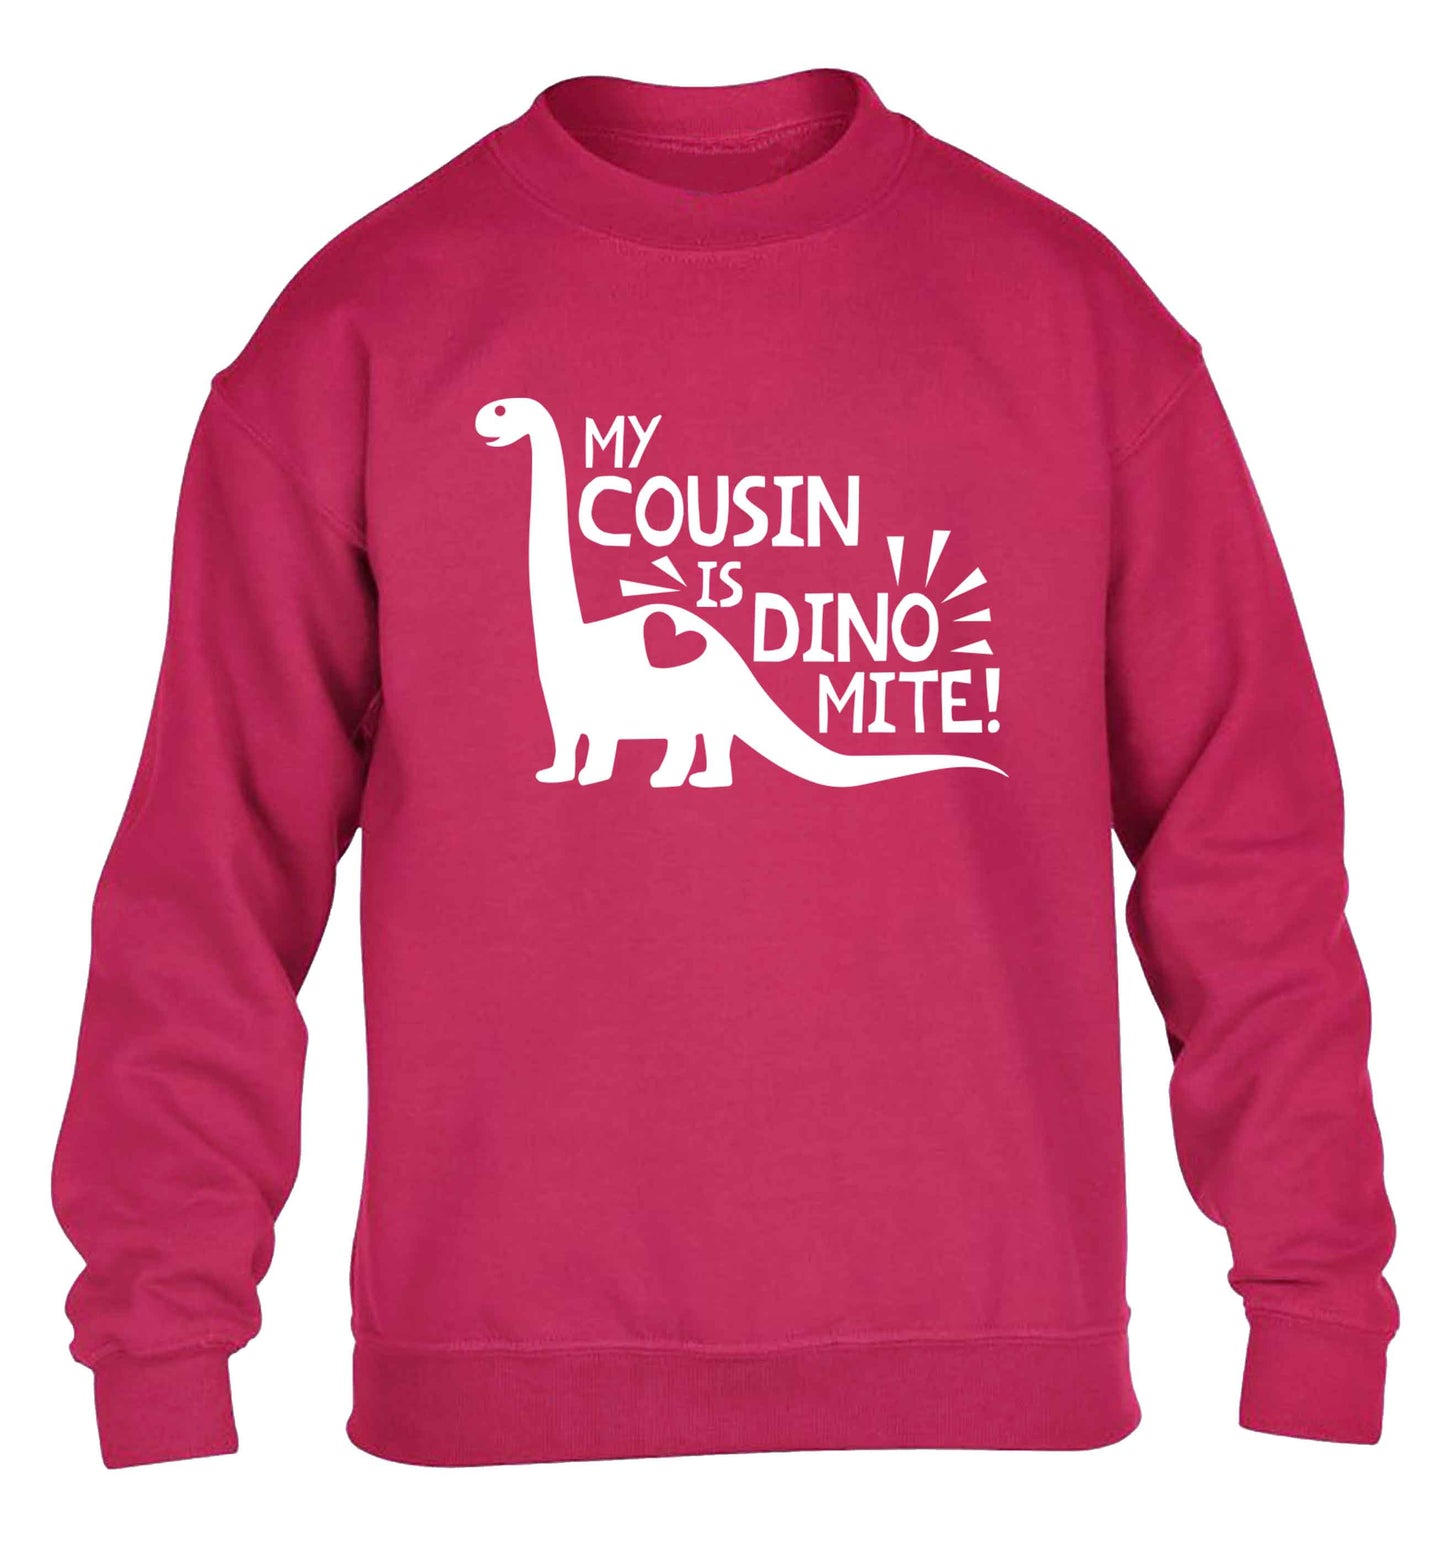 My cousin is dinomite! children's pink sweater 12-13 Years